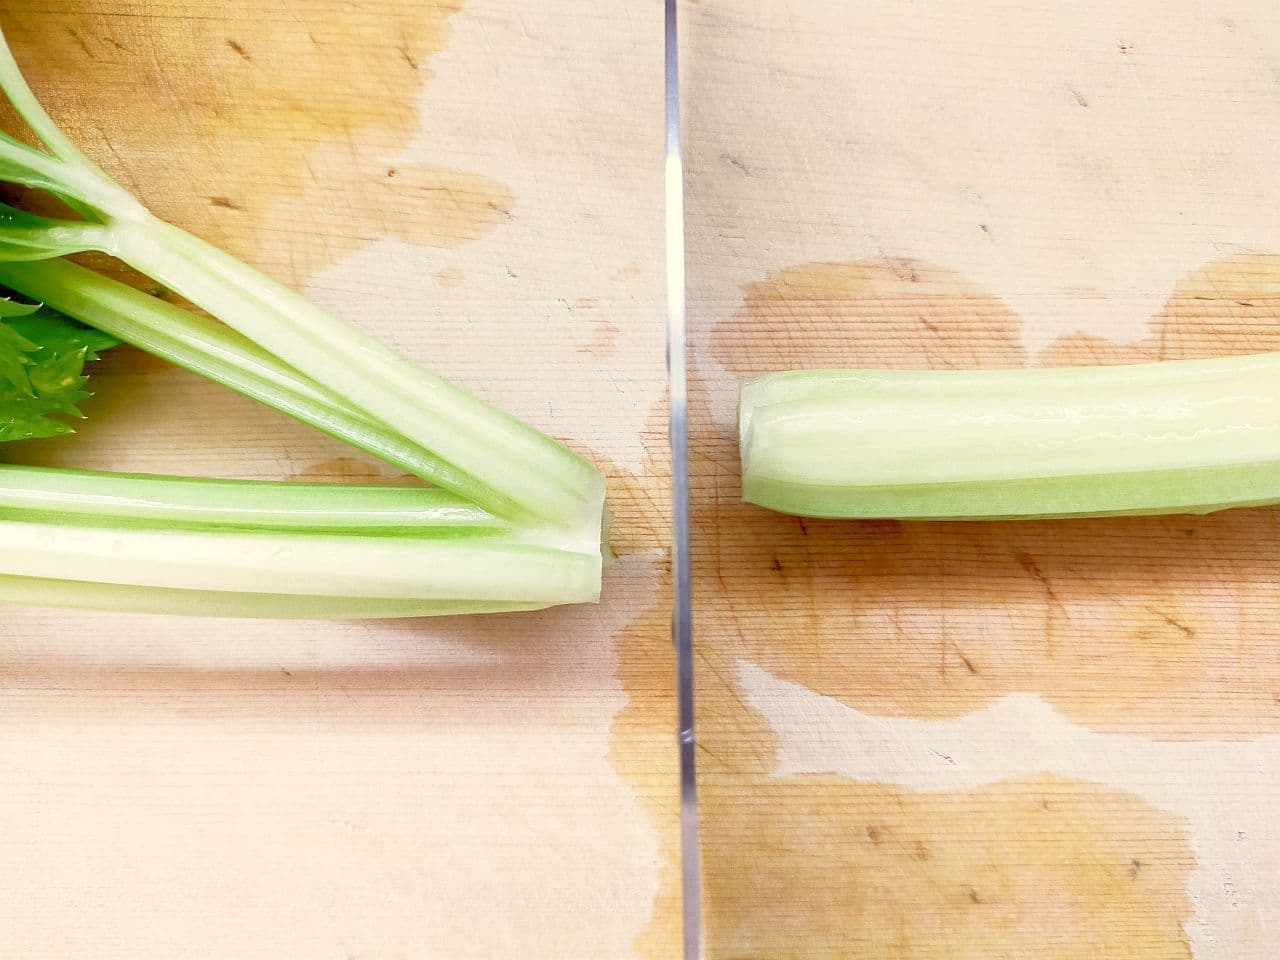 Step 1 How to remove celery streaks